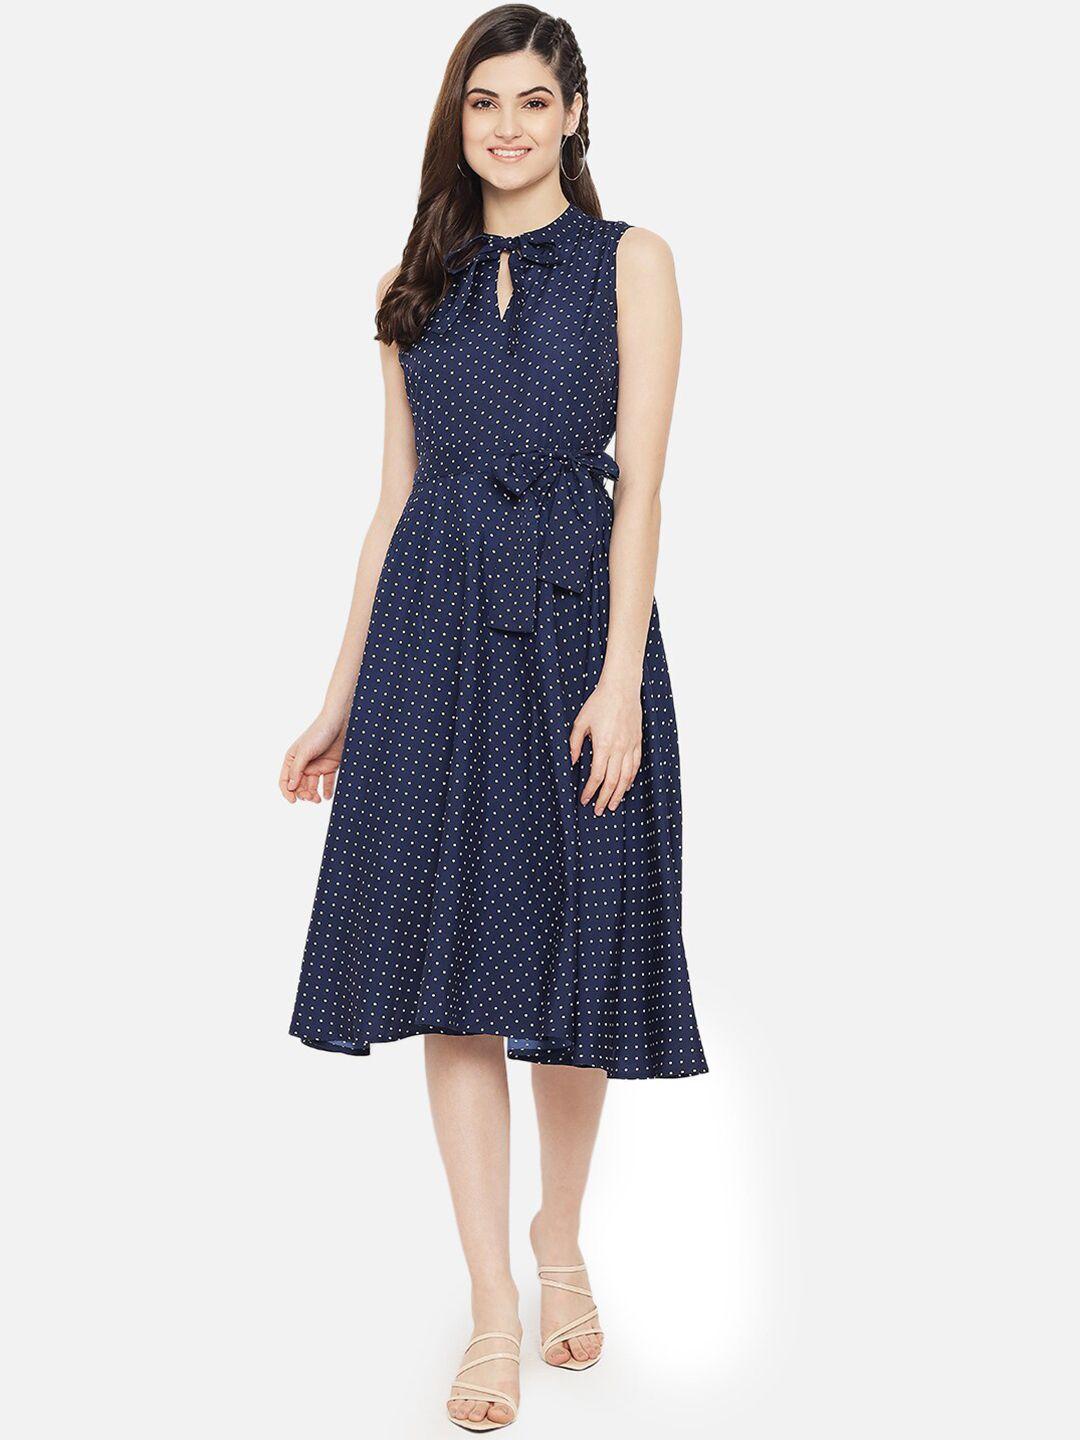 yaadleen navy blue polka dot printed keyhole neck crepe midi dress